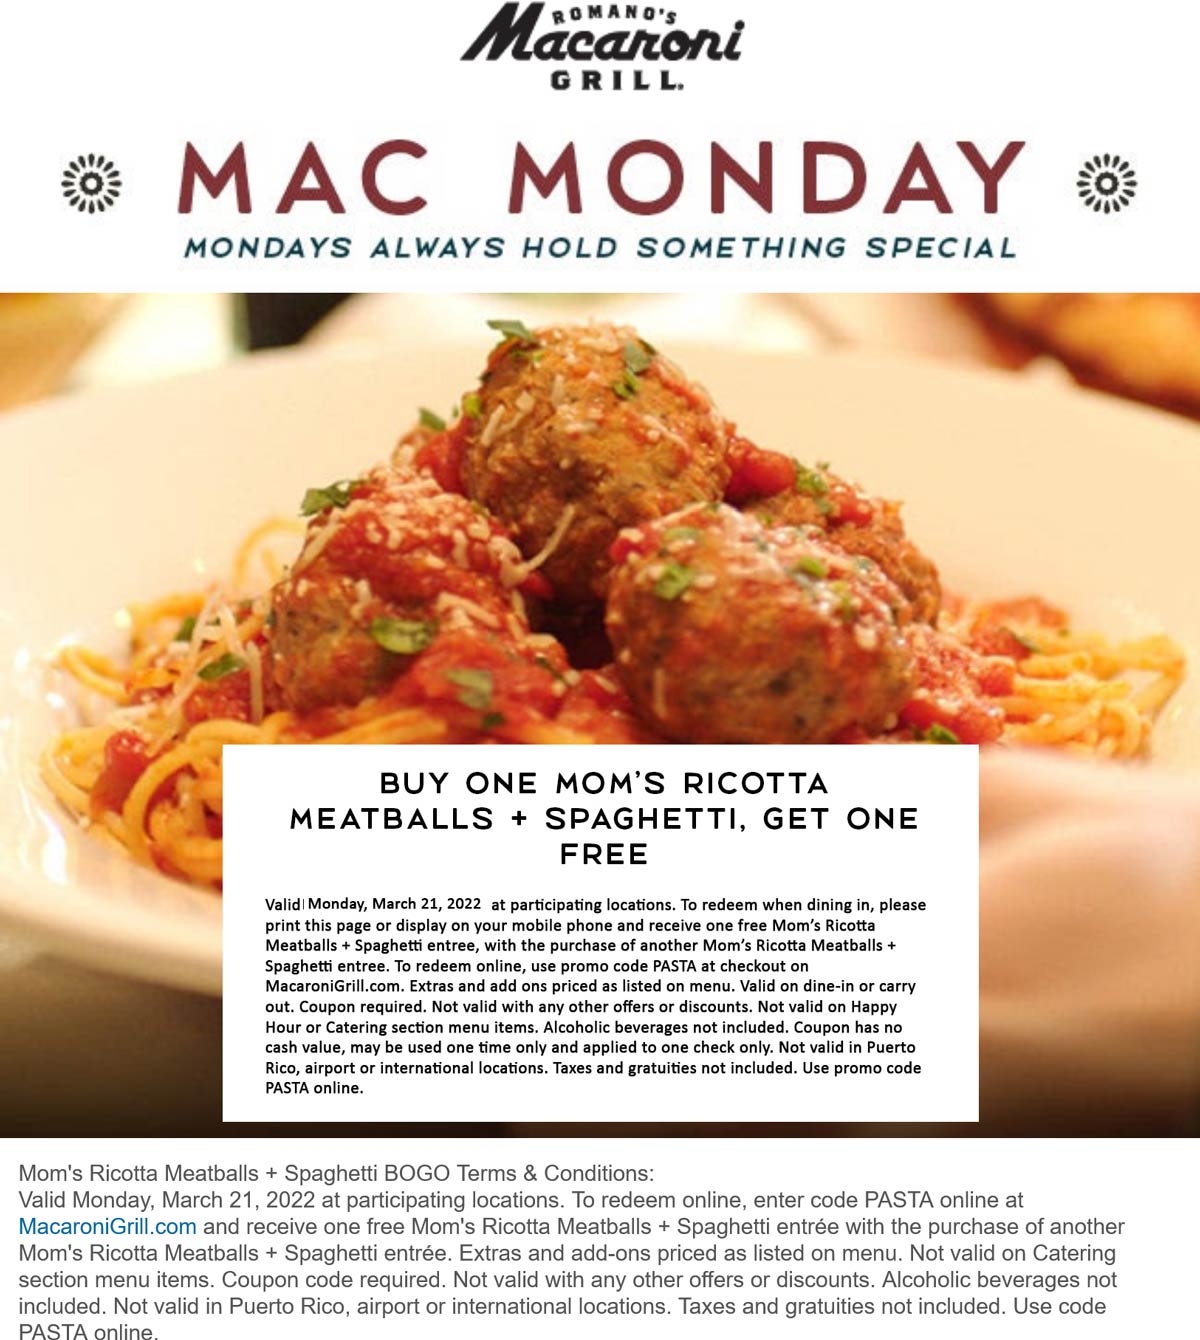 Macaroni Grill restaurants Coupon  Second spaghetti & meatballs entree free today at Macaroni Grill #macaronigrill 